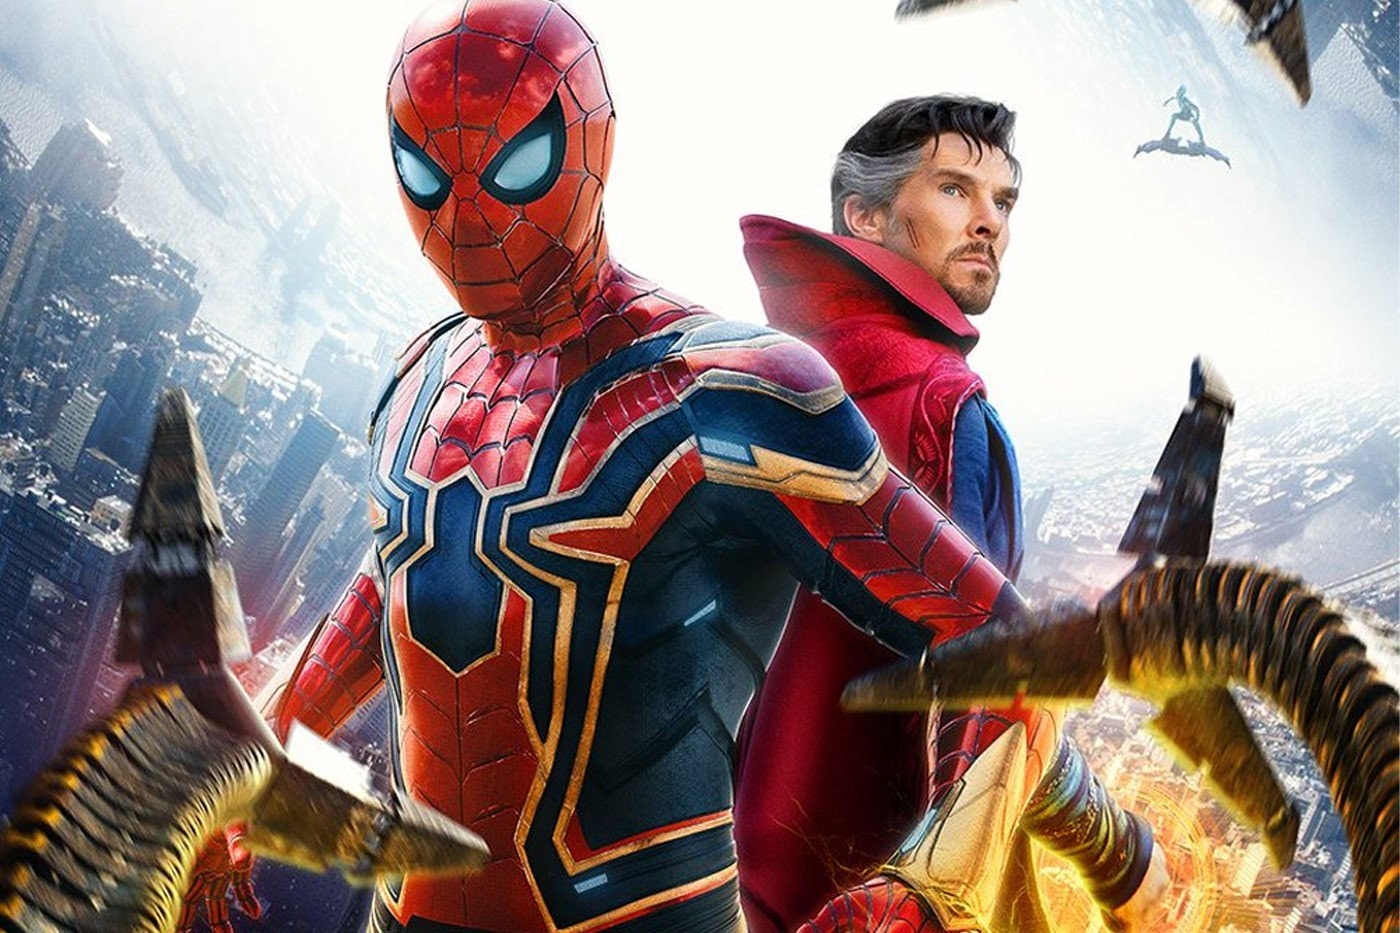 《Spider-Man: No Way Home》北美上映首周票房突破 $2.4 億美元